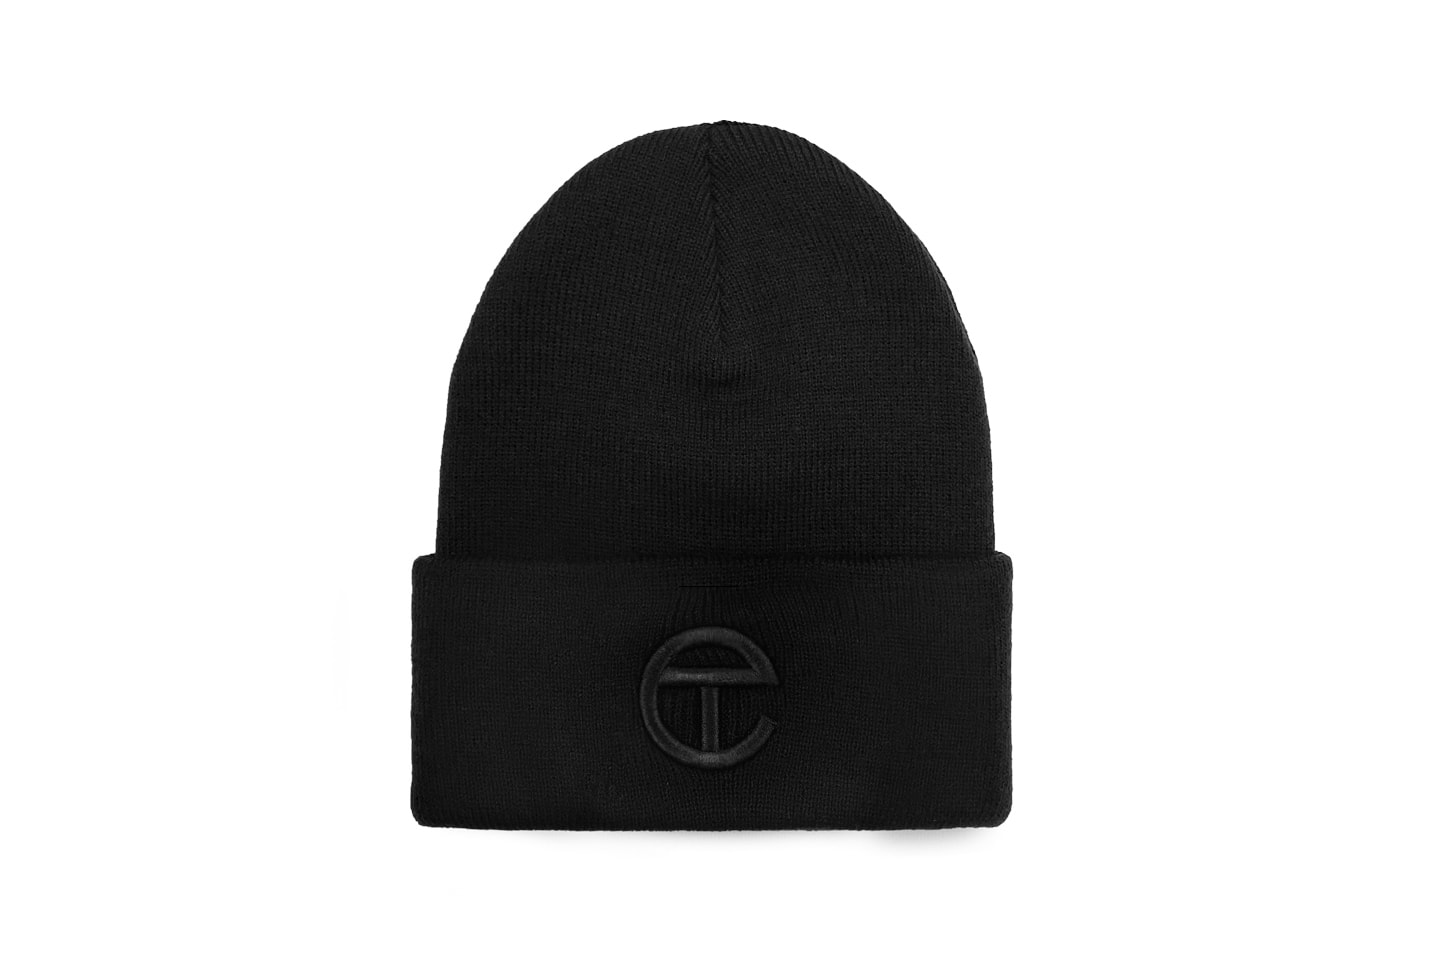 Telfar Logo Beanie Black White Hat